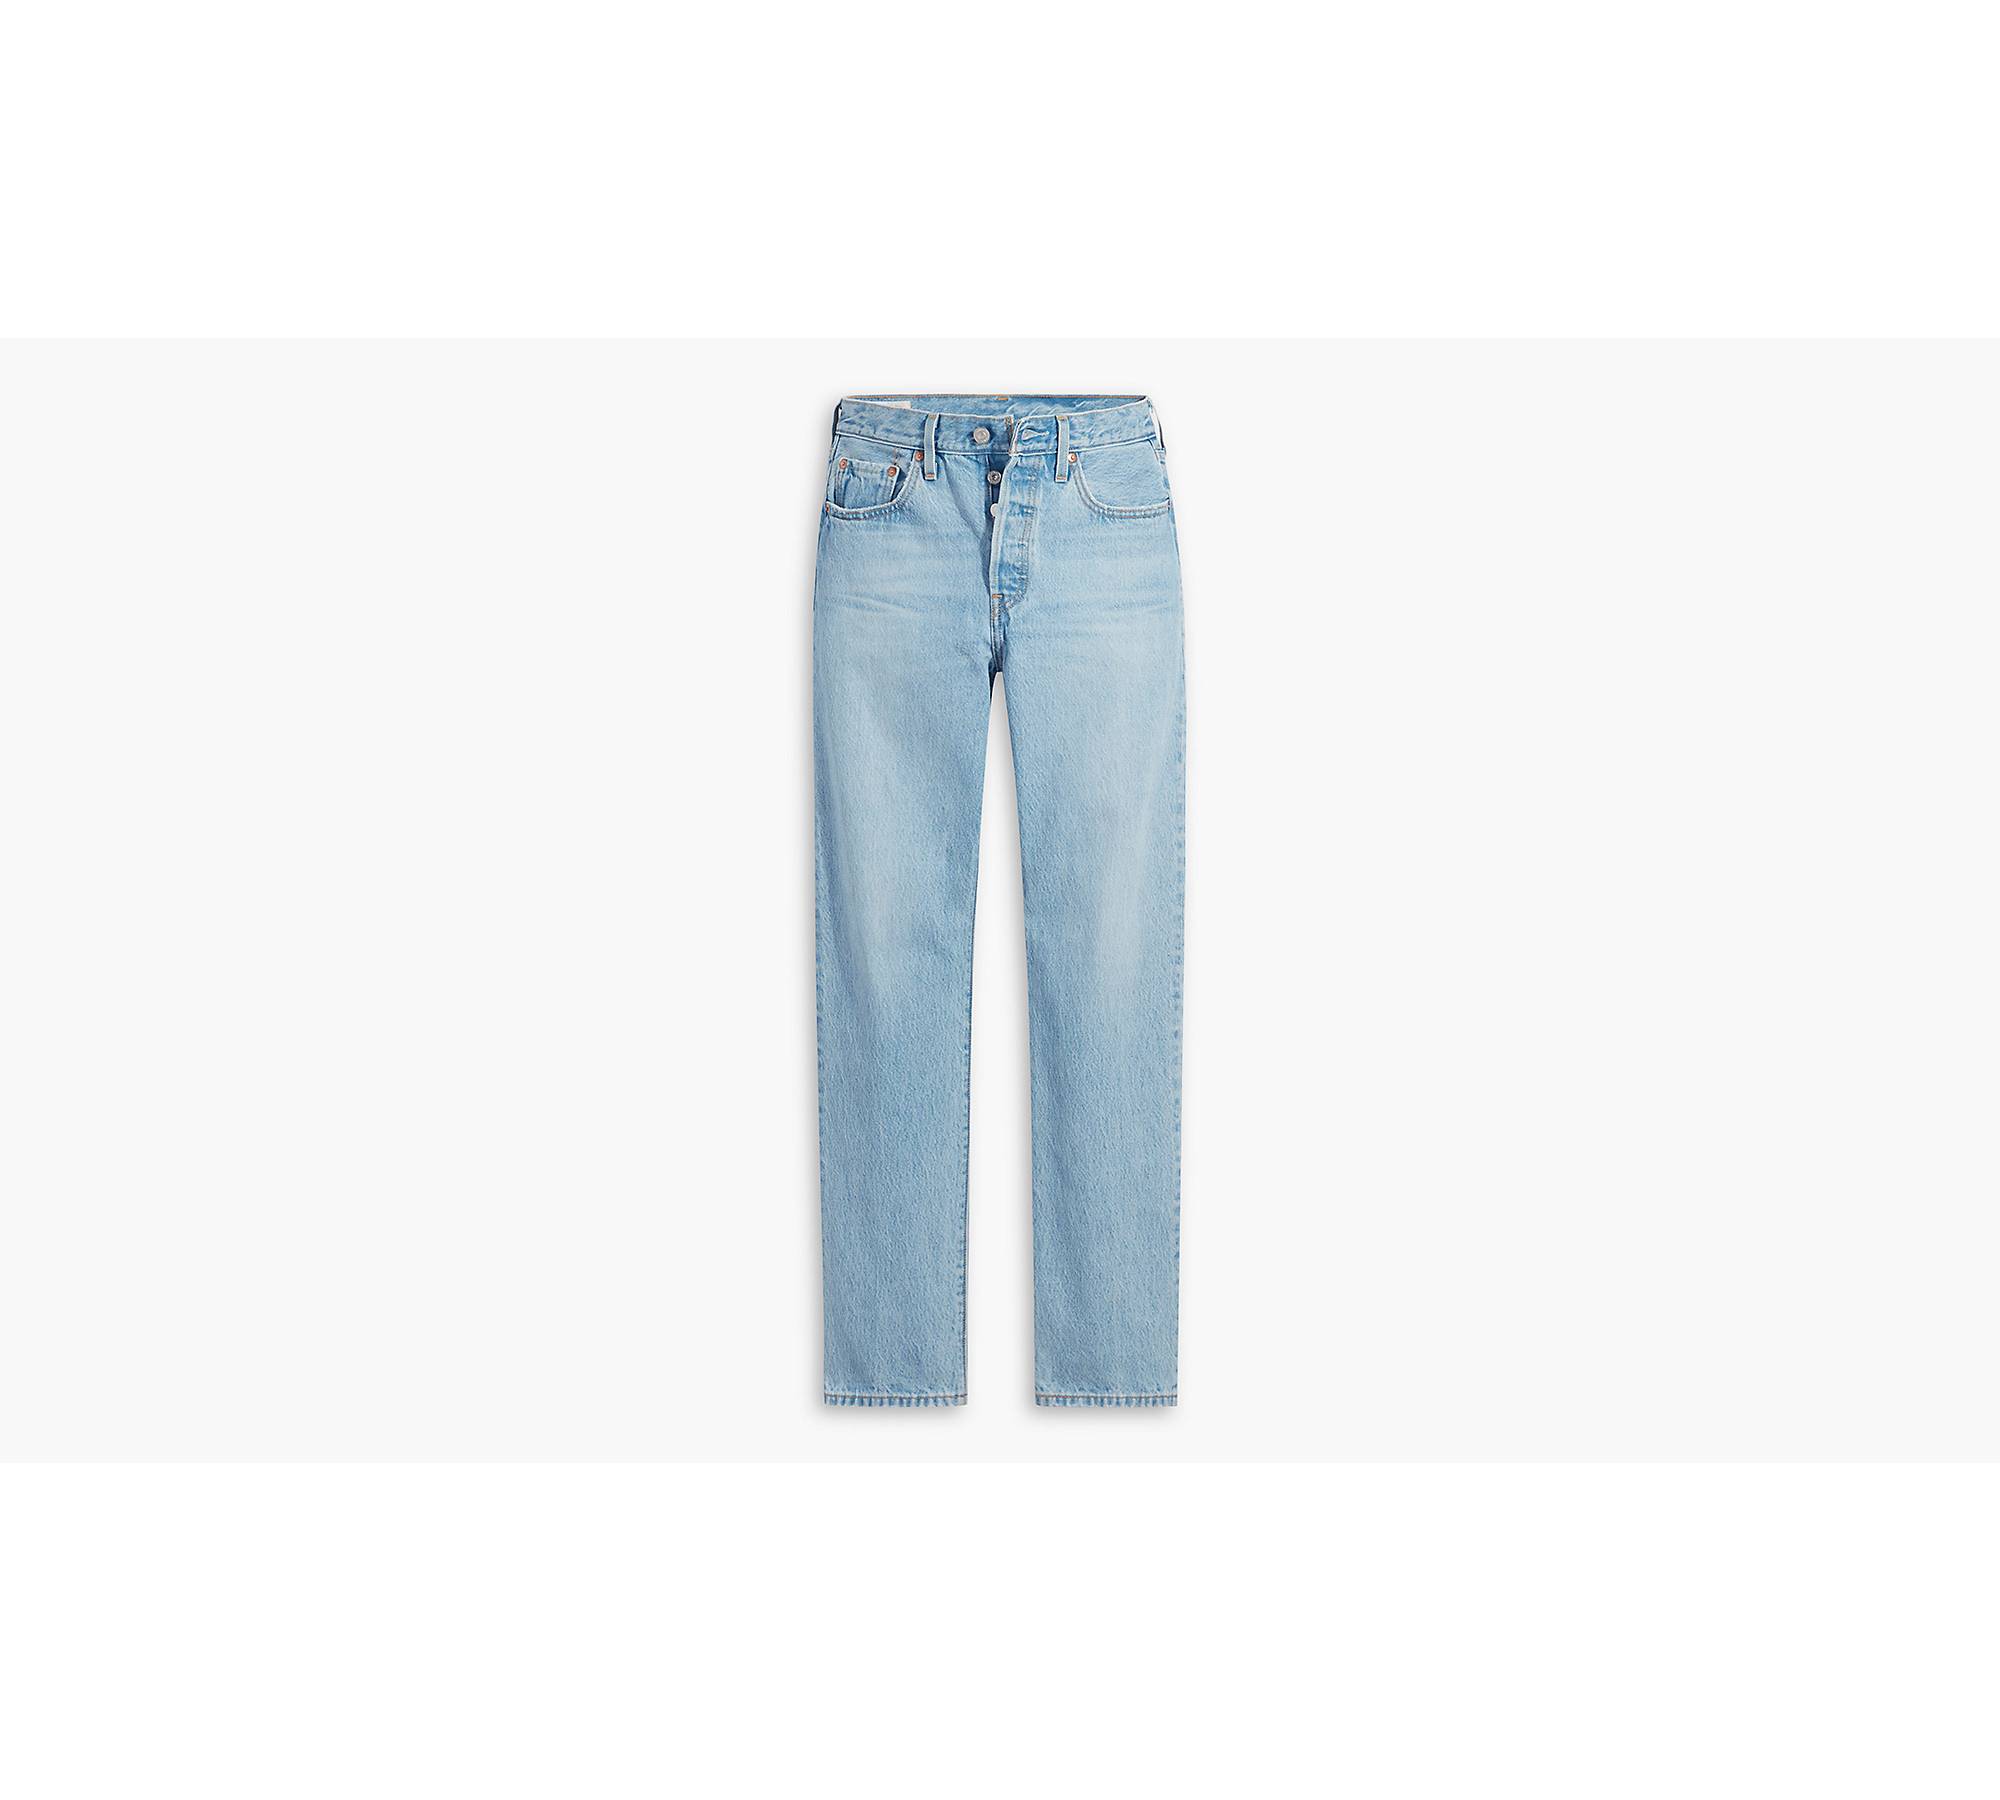 Levi's 501 Original Fit Jeans for Women for sale